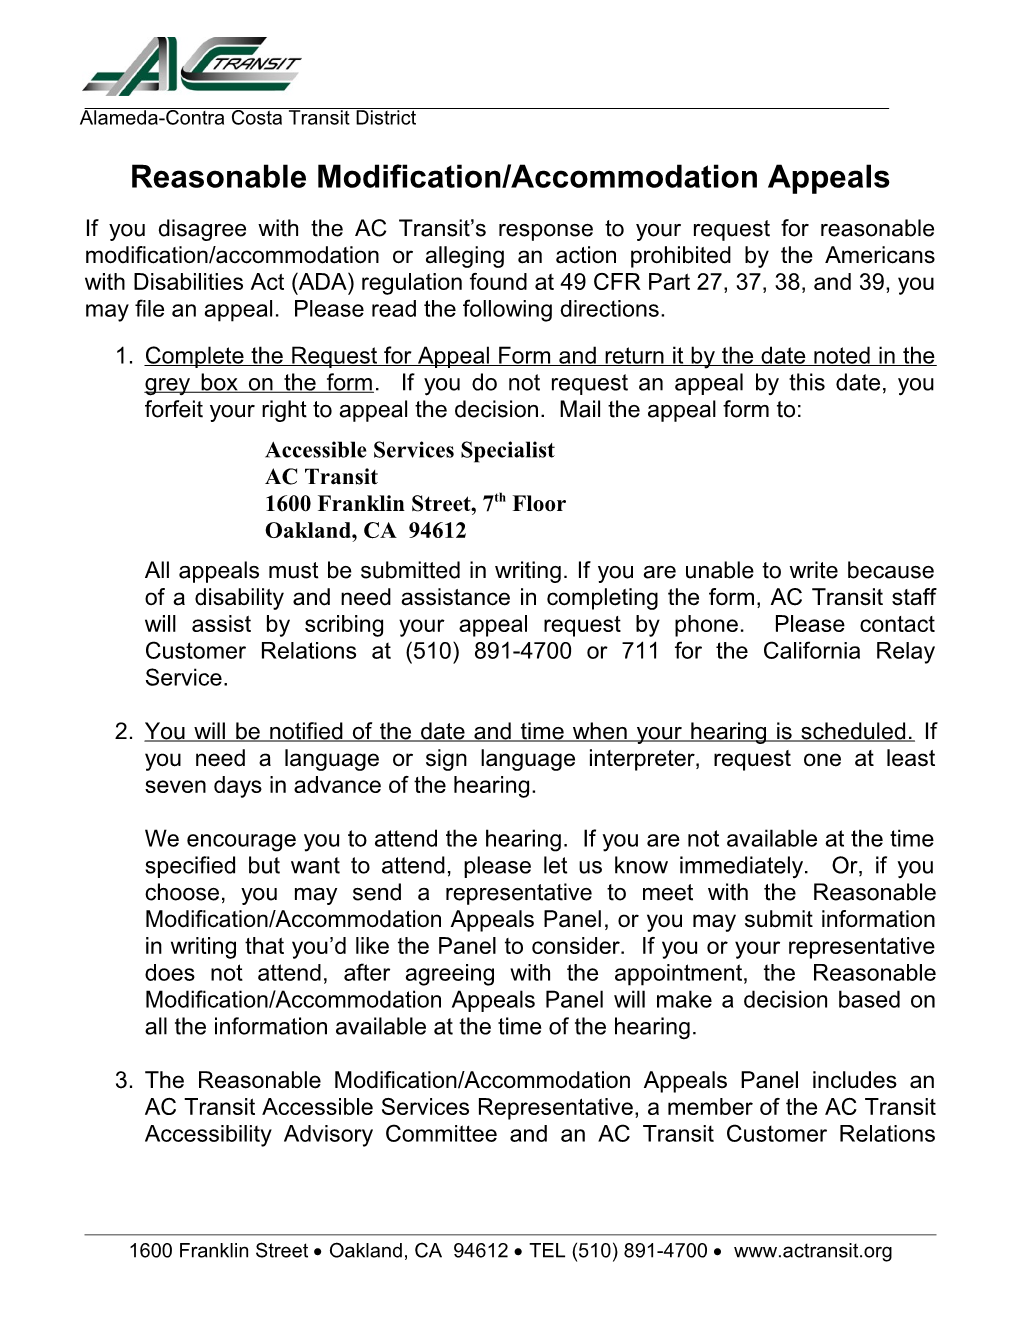 Reasonable Modification/Accommodation Appeals